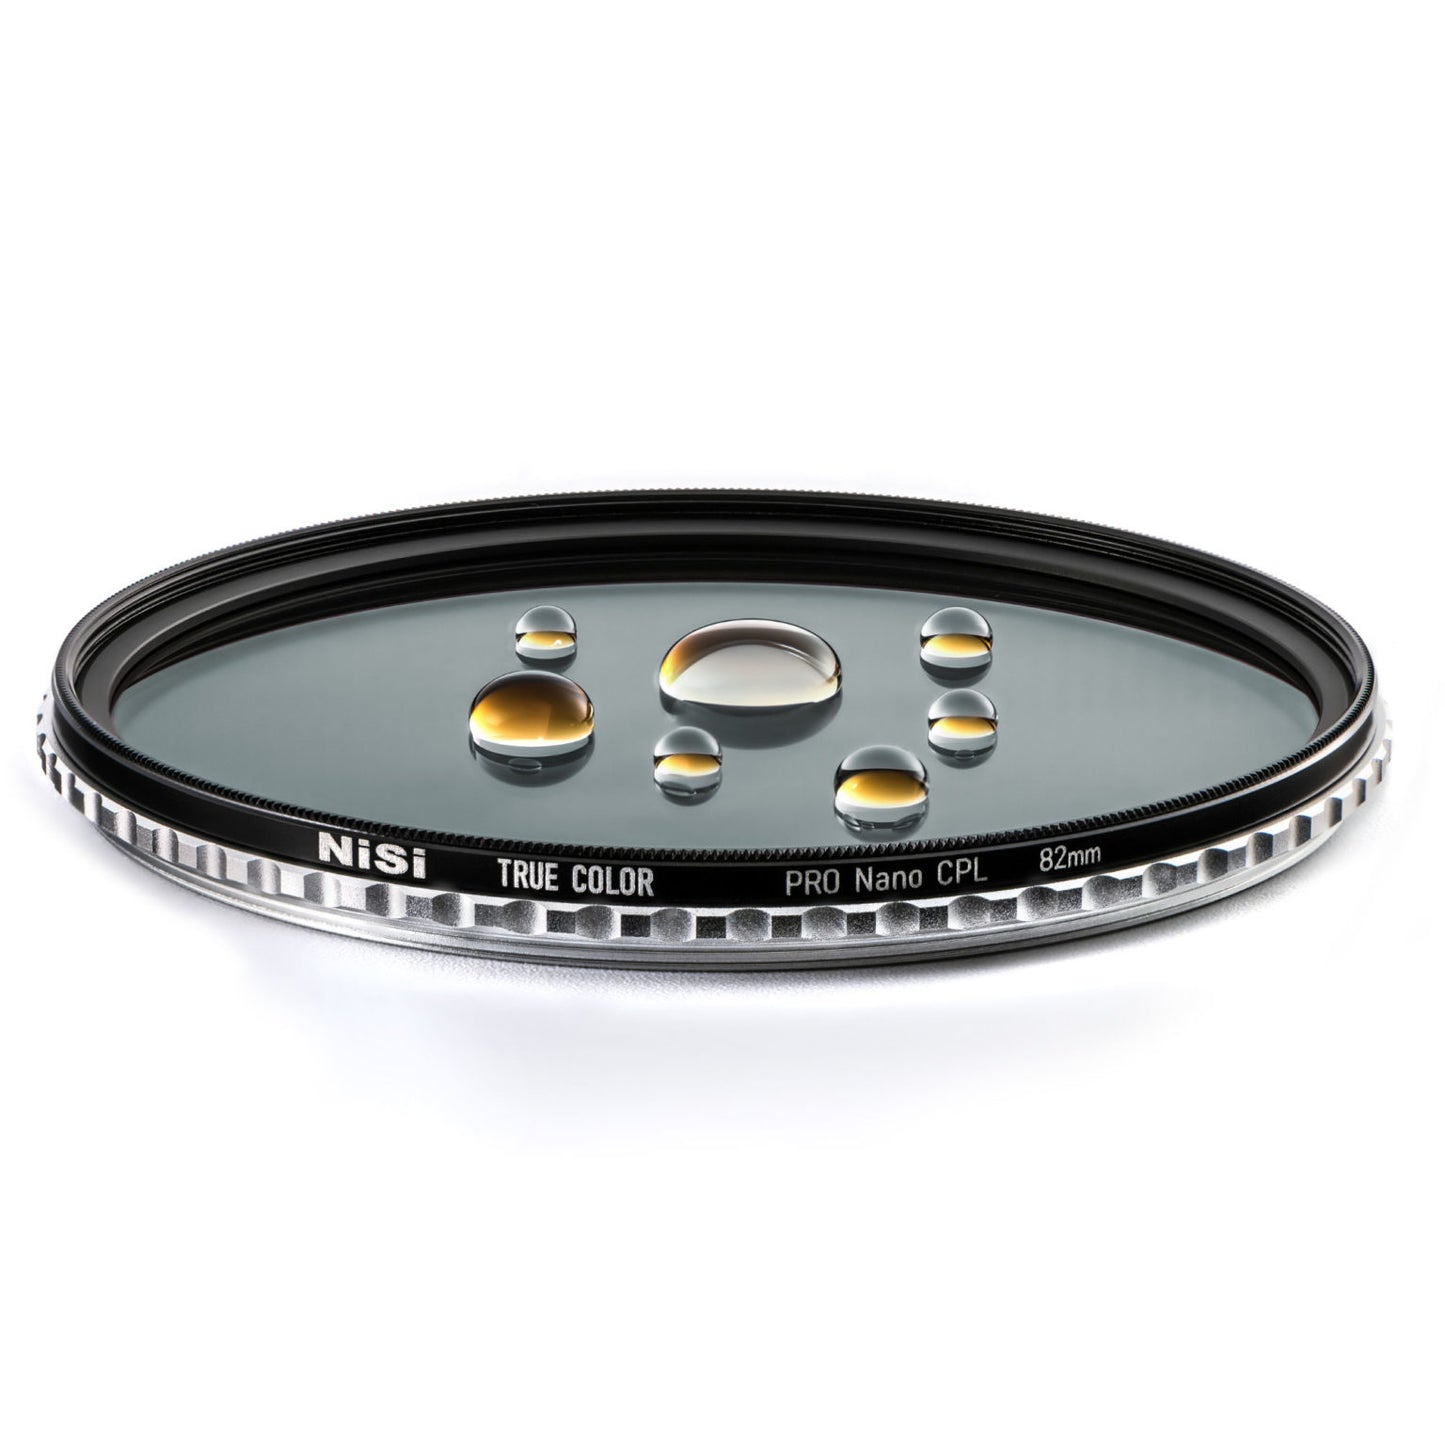 NiSi 77mm True Color Pro Nano CPL Circular Polarizing Filter